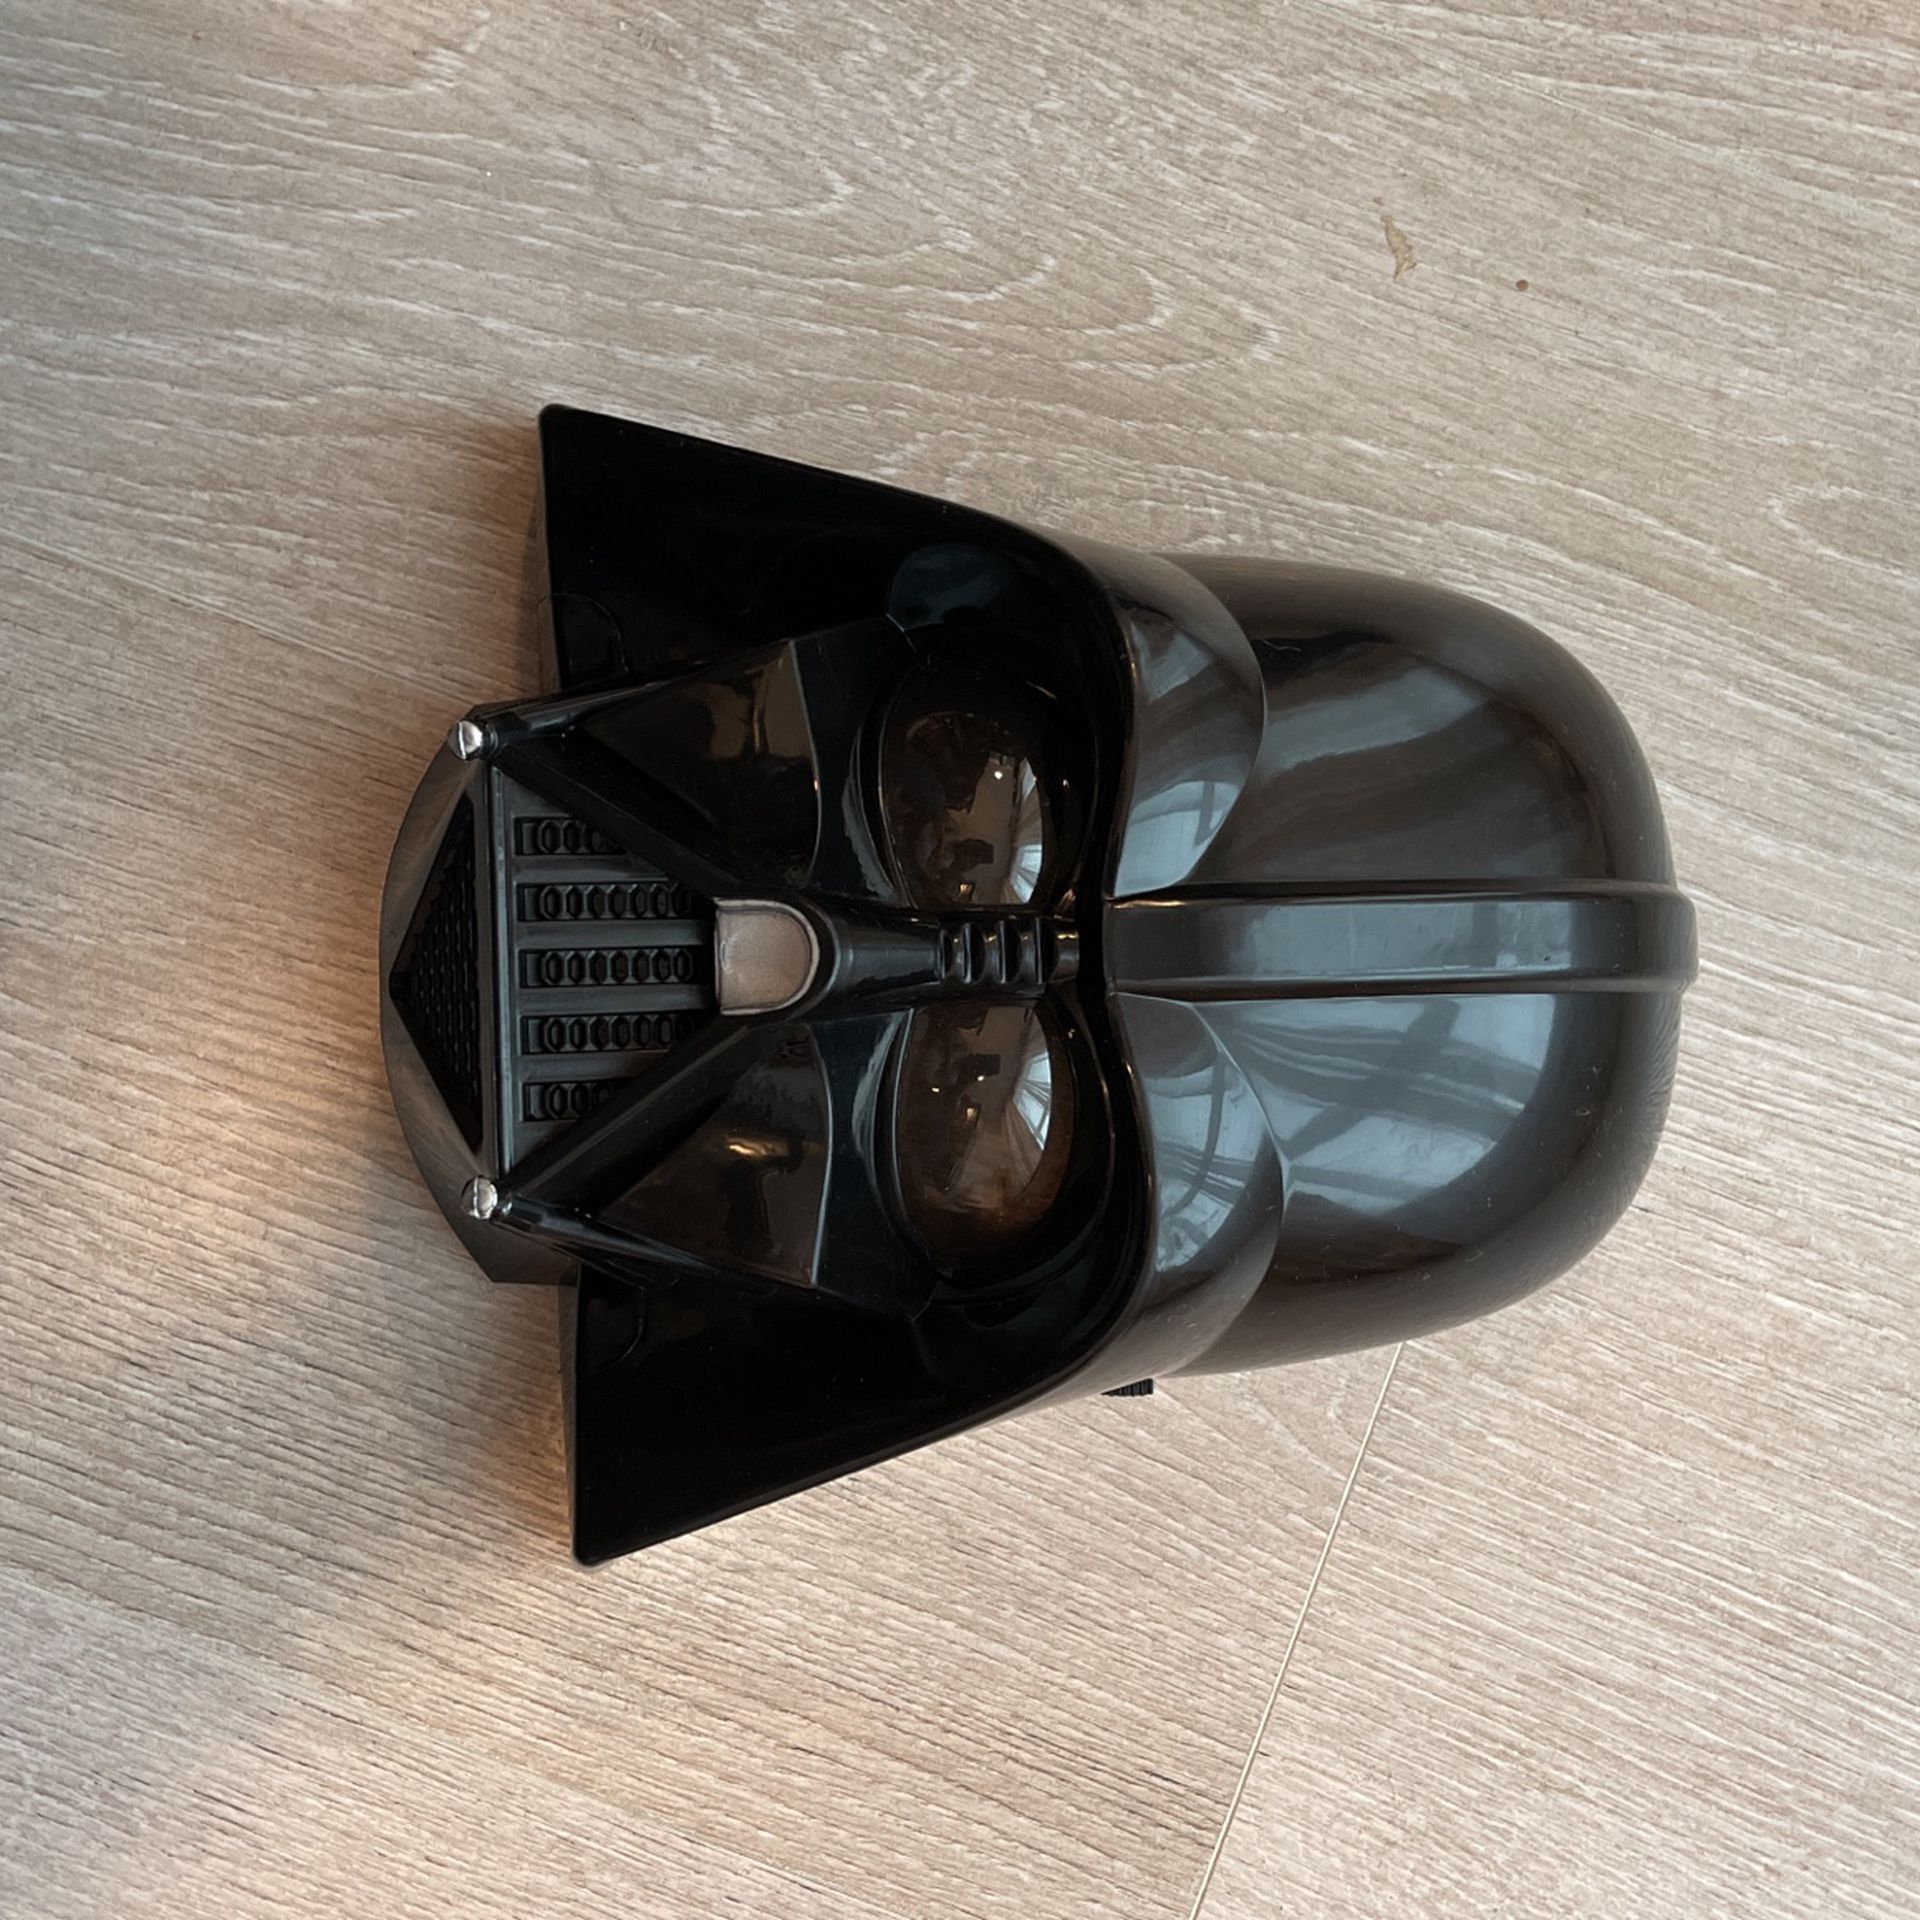 Darth Vader Halloween Face Mask